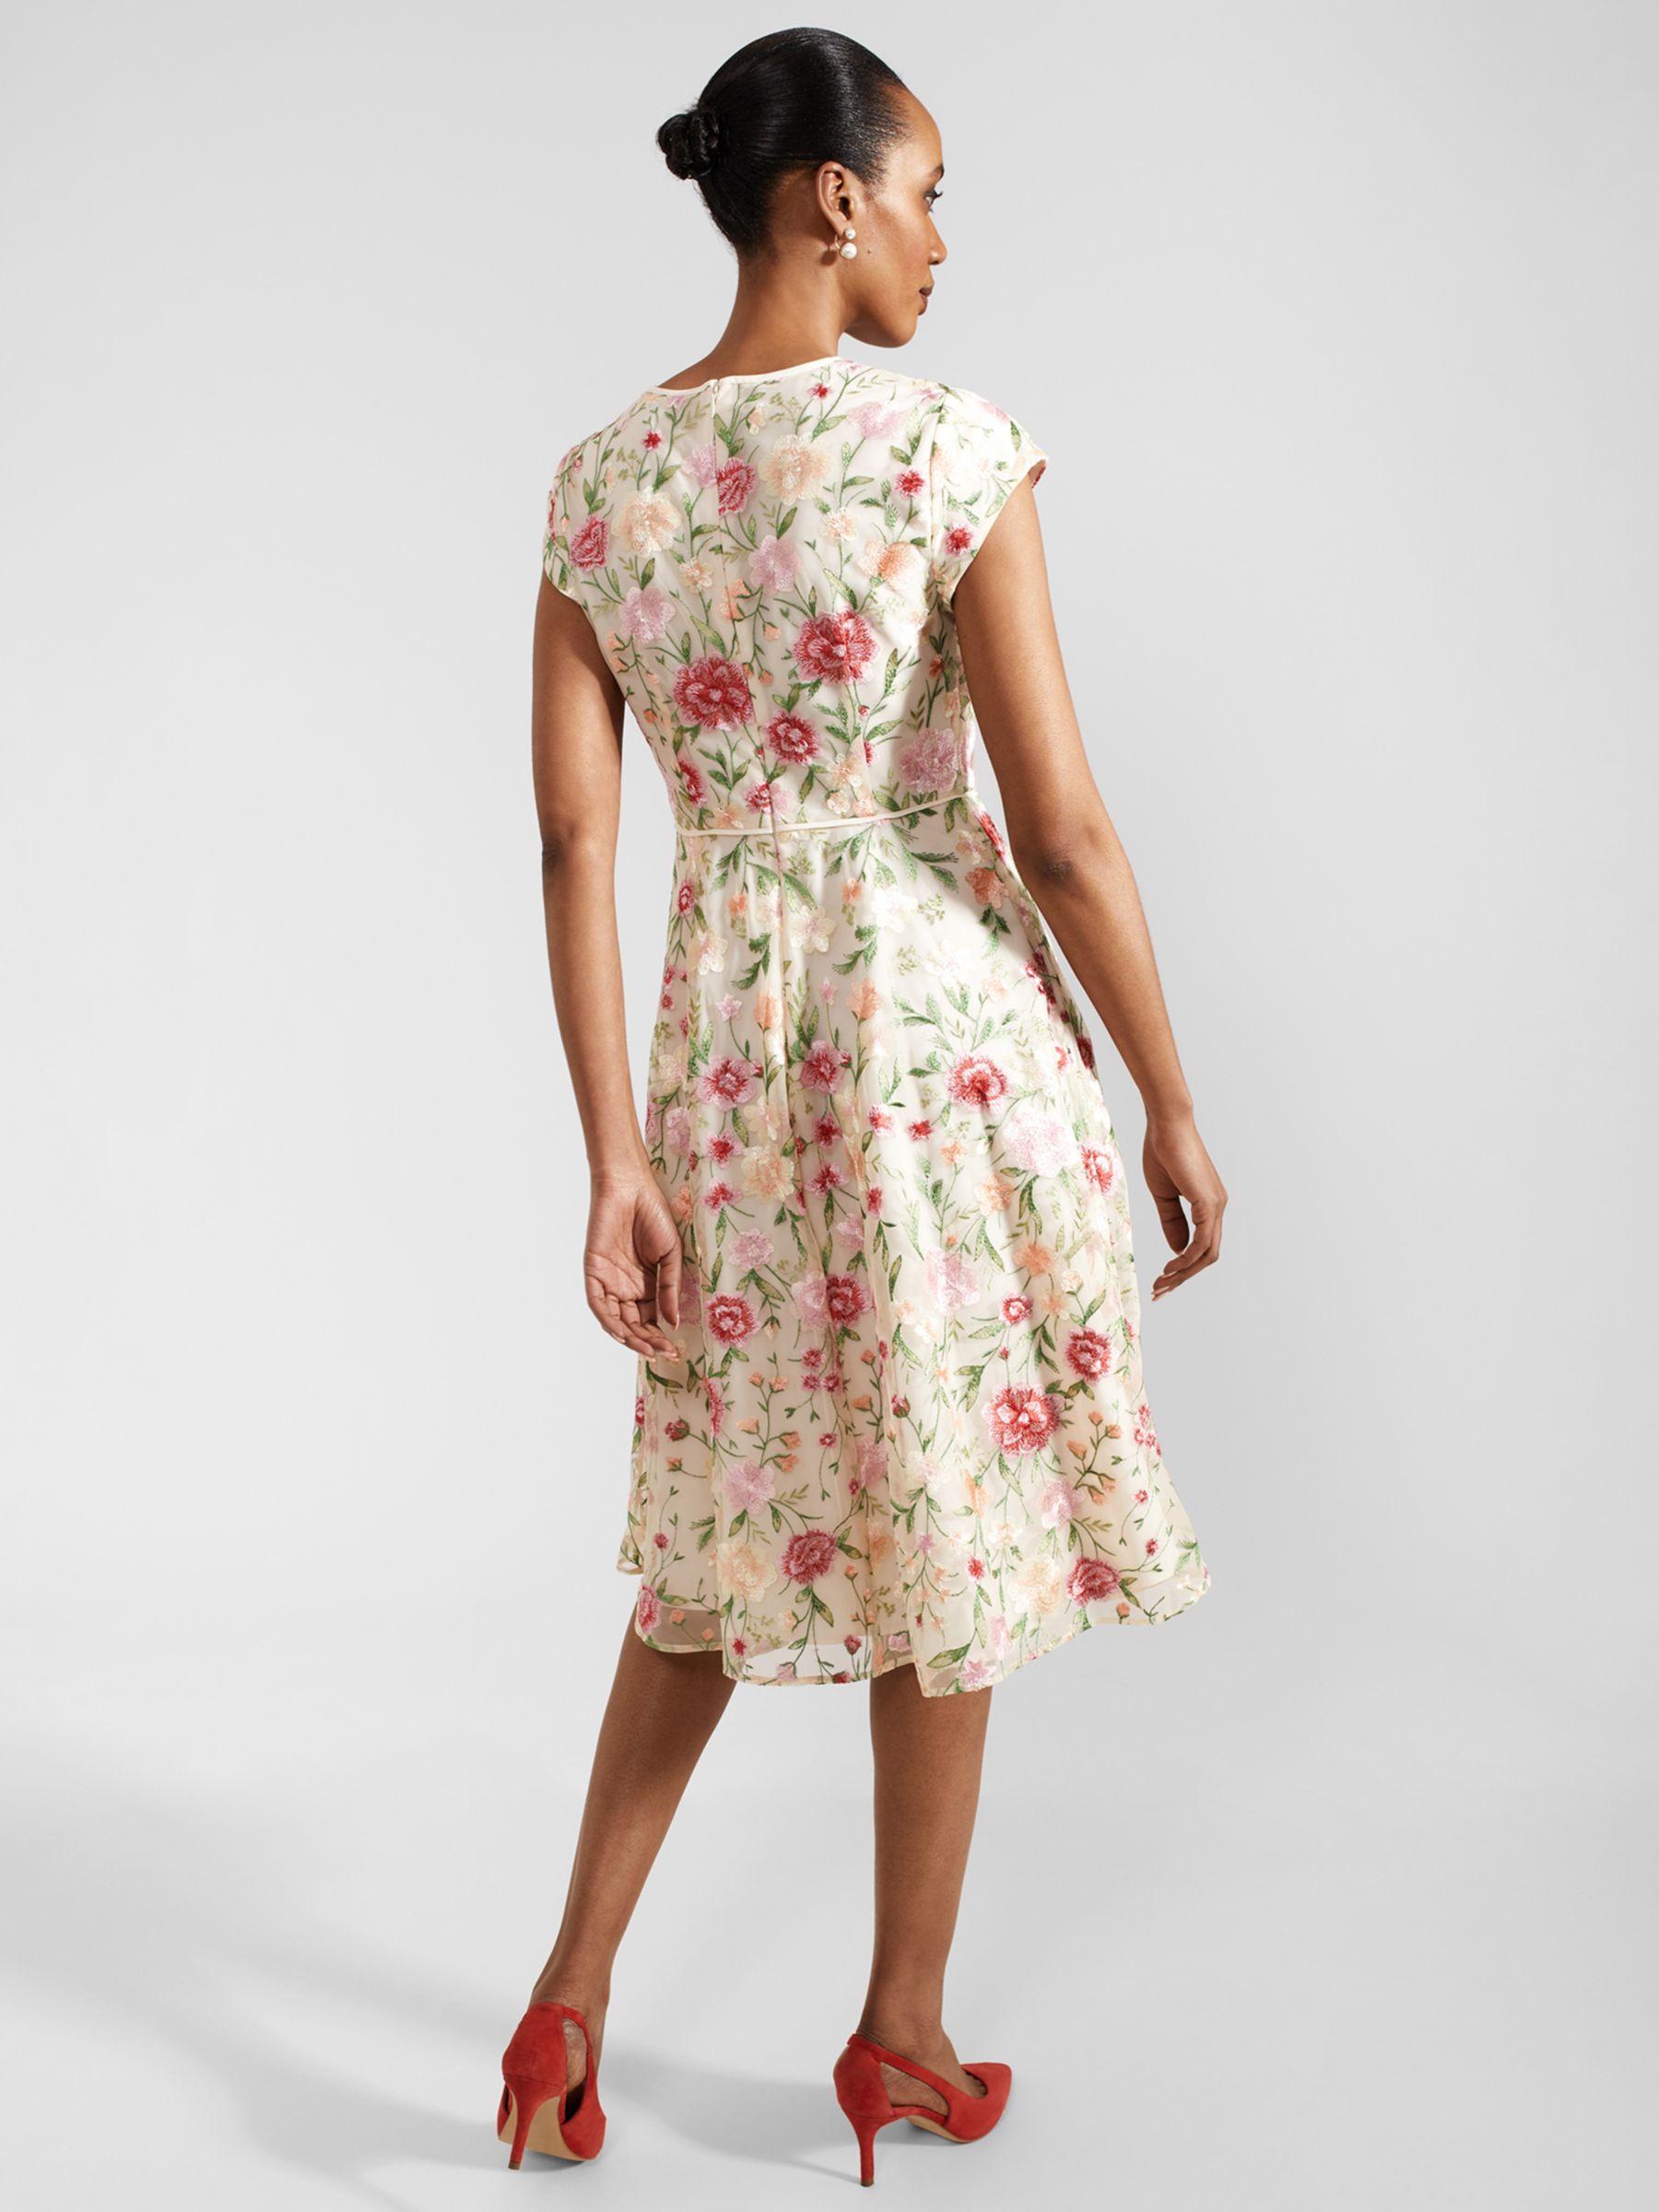 Hobbs Tia Floral Embroidery Dress, Cream/Multi, 10